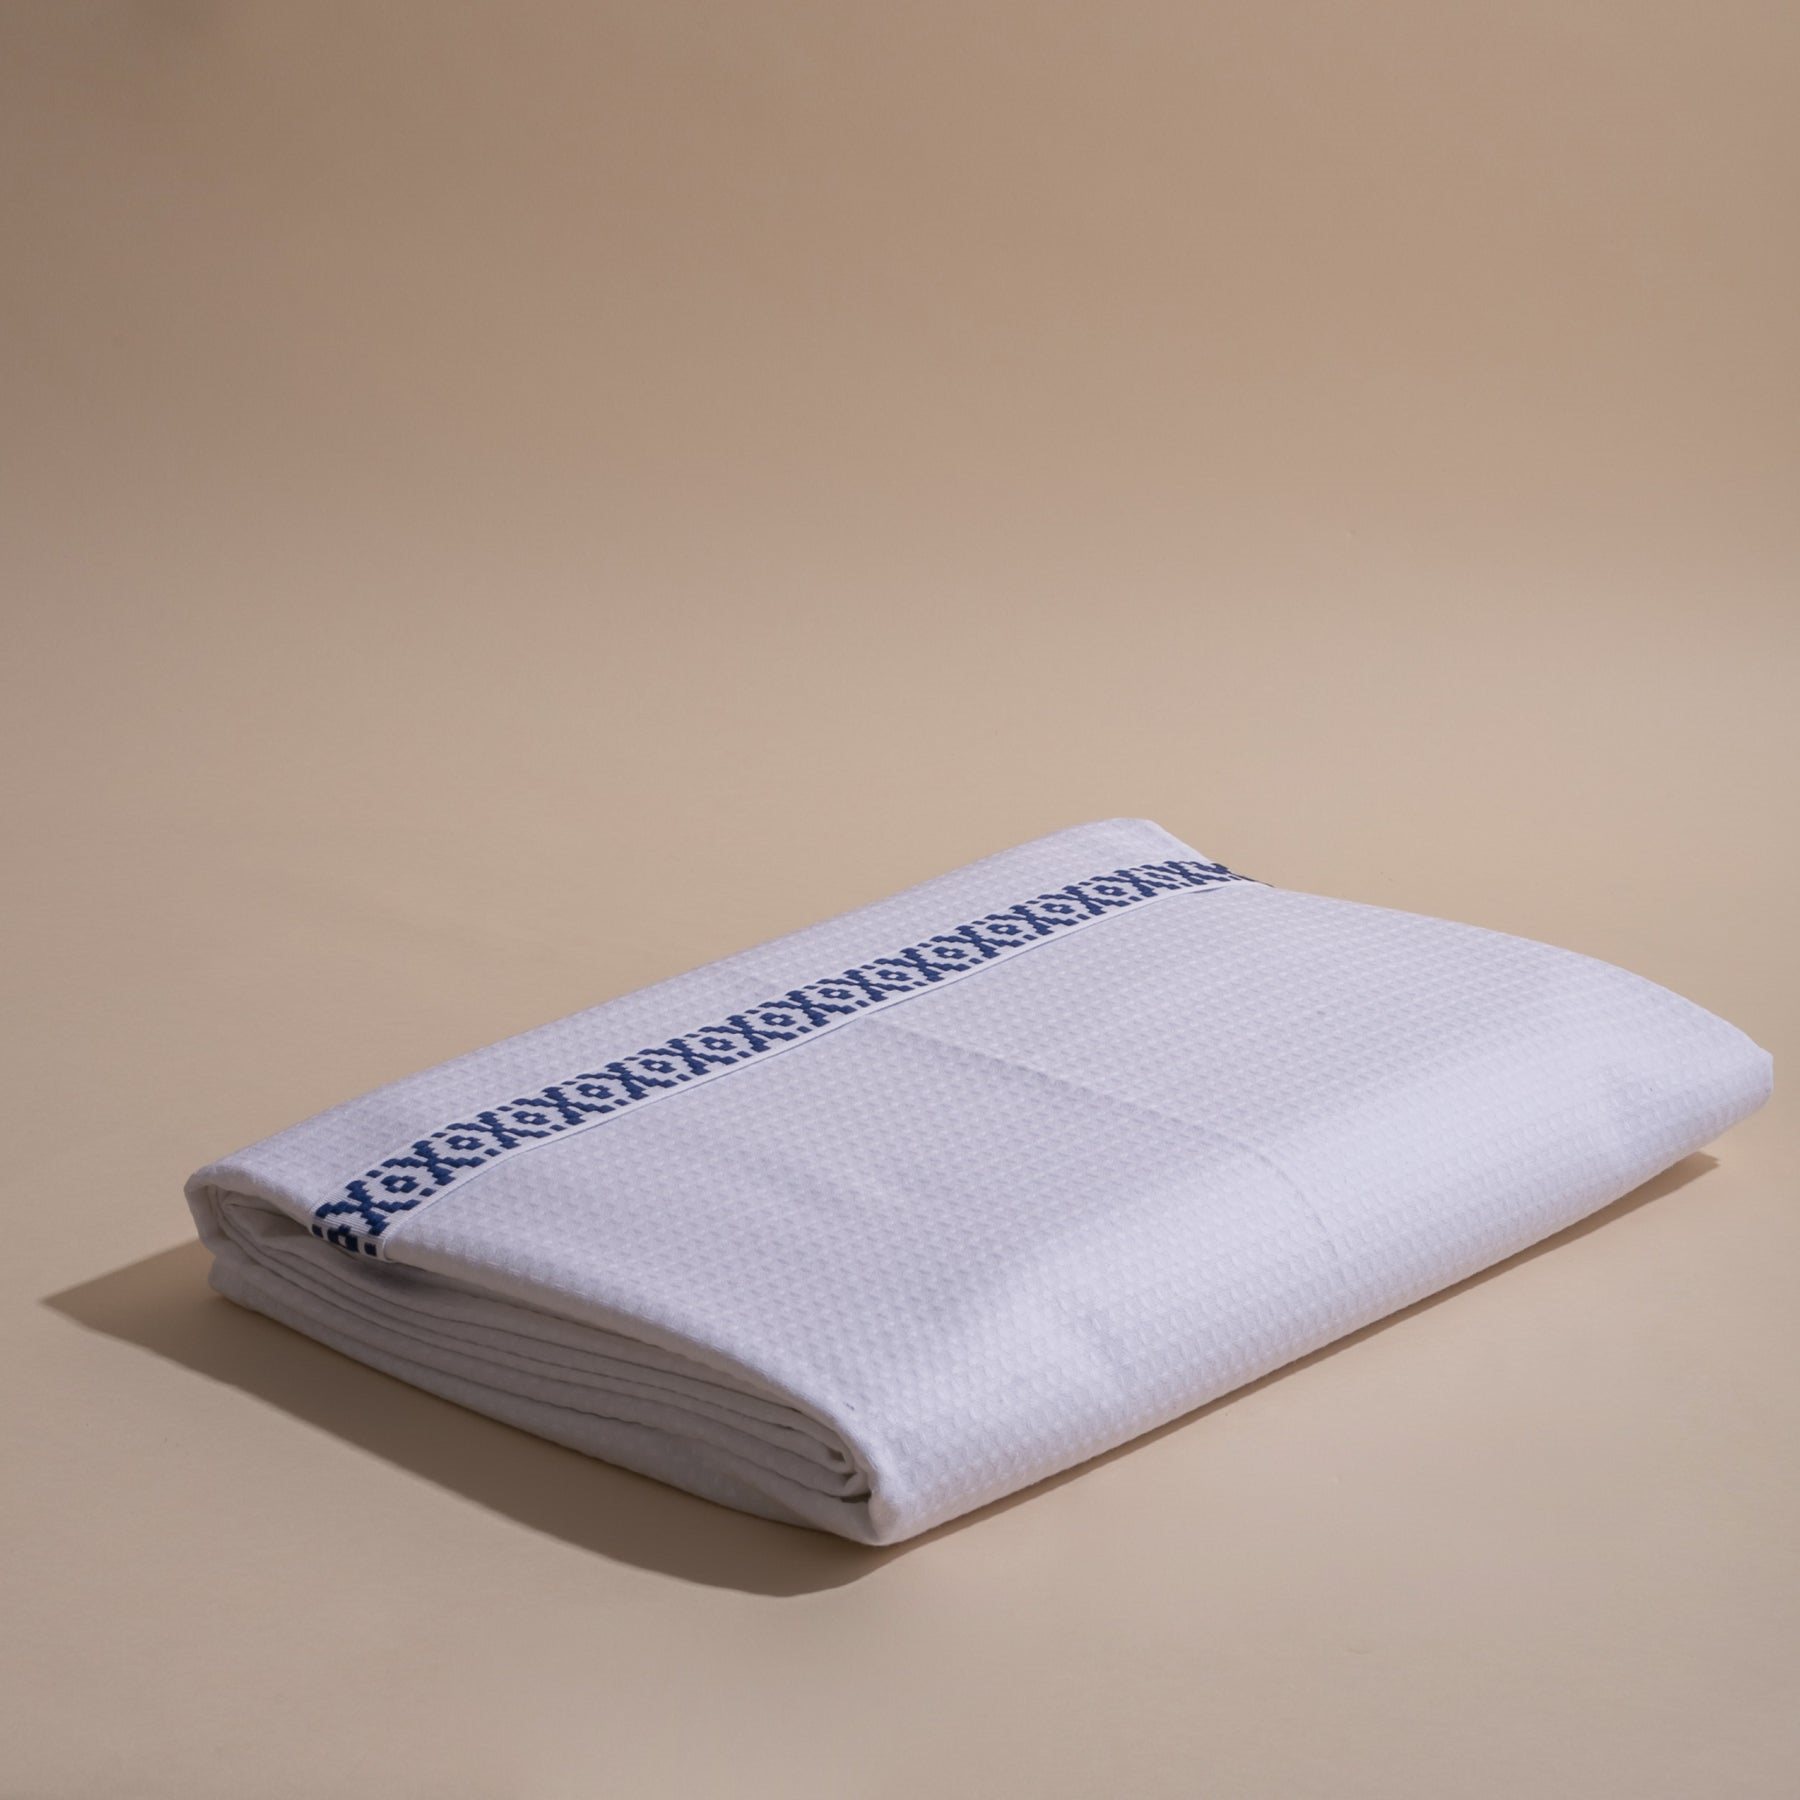 White Fabric Κουβέρτα Suillivan Άσπρη Μονή (170 X 245cm)